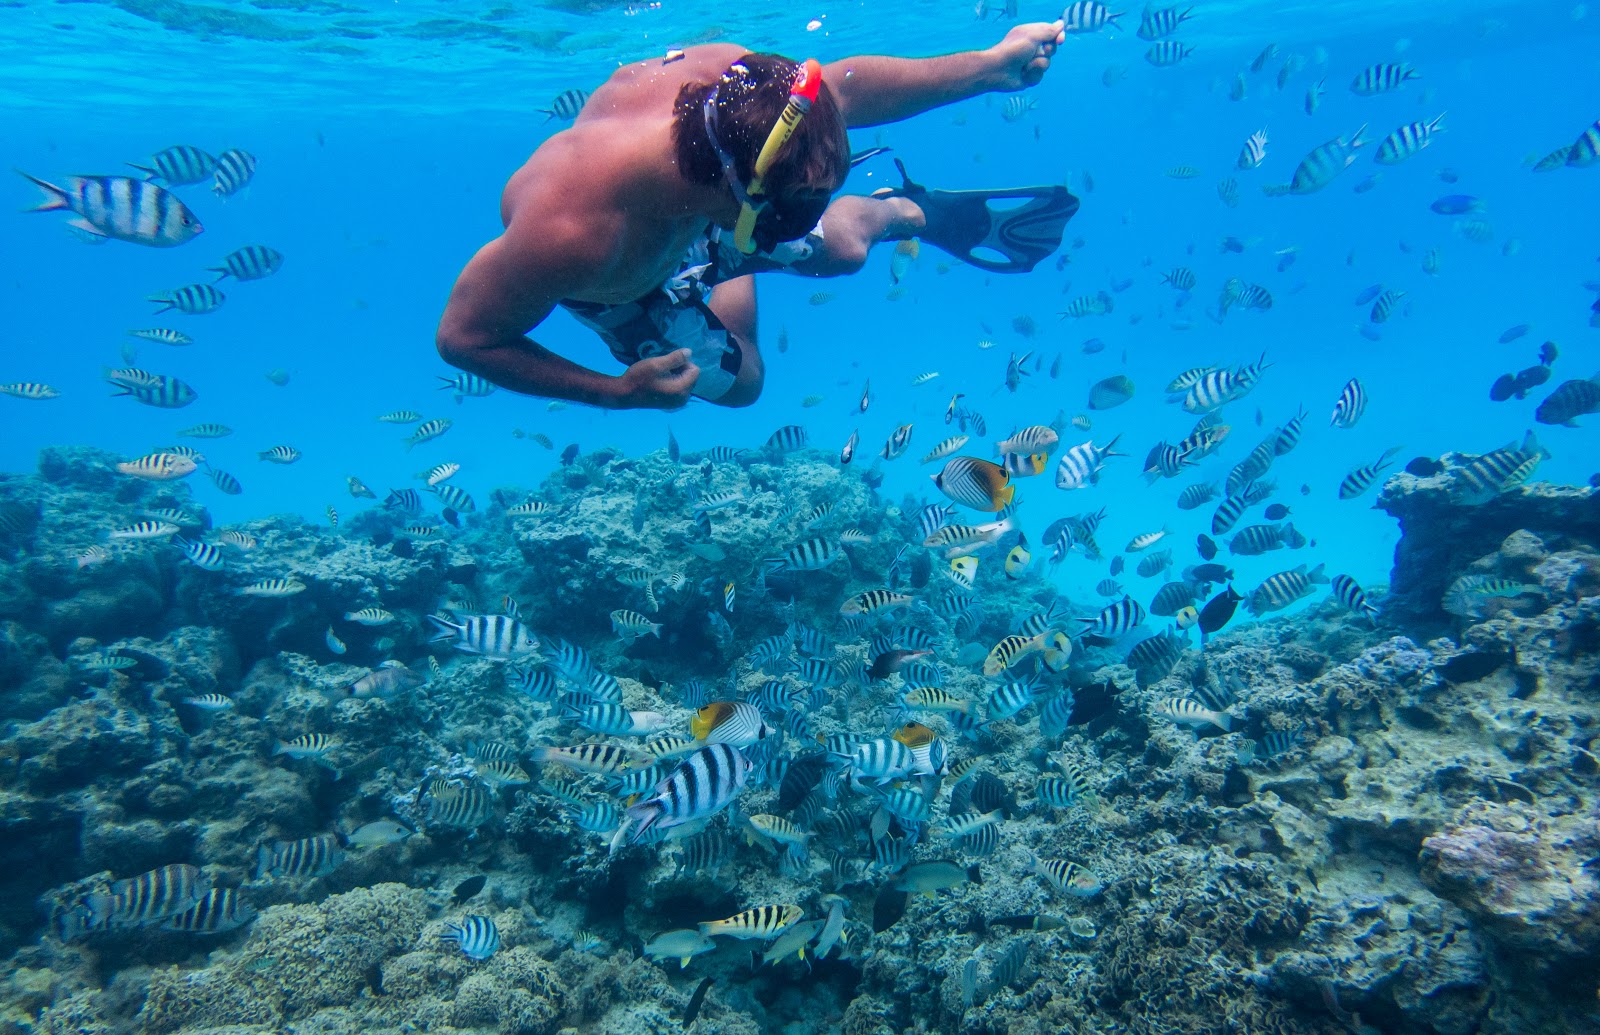 Aquarium Snorkeling Location @ Bora Bora, Tahiti